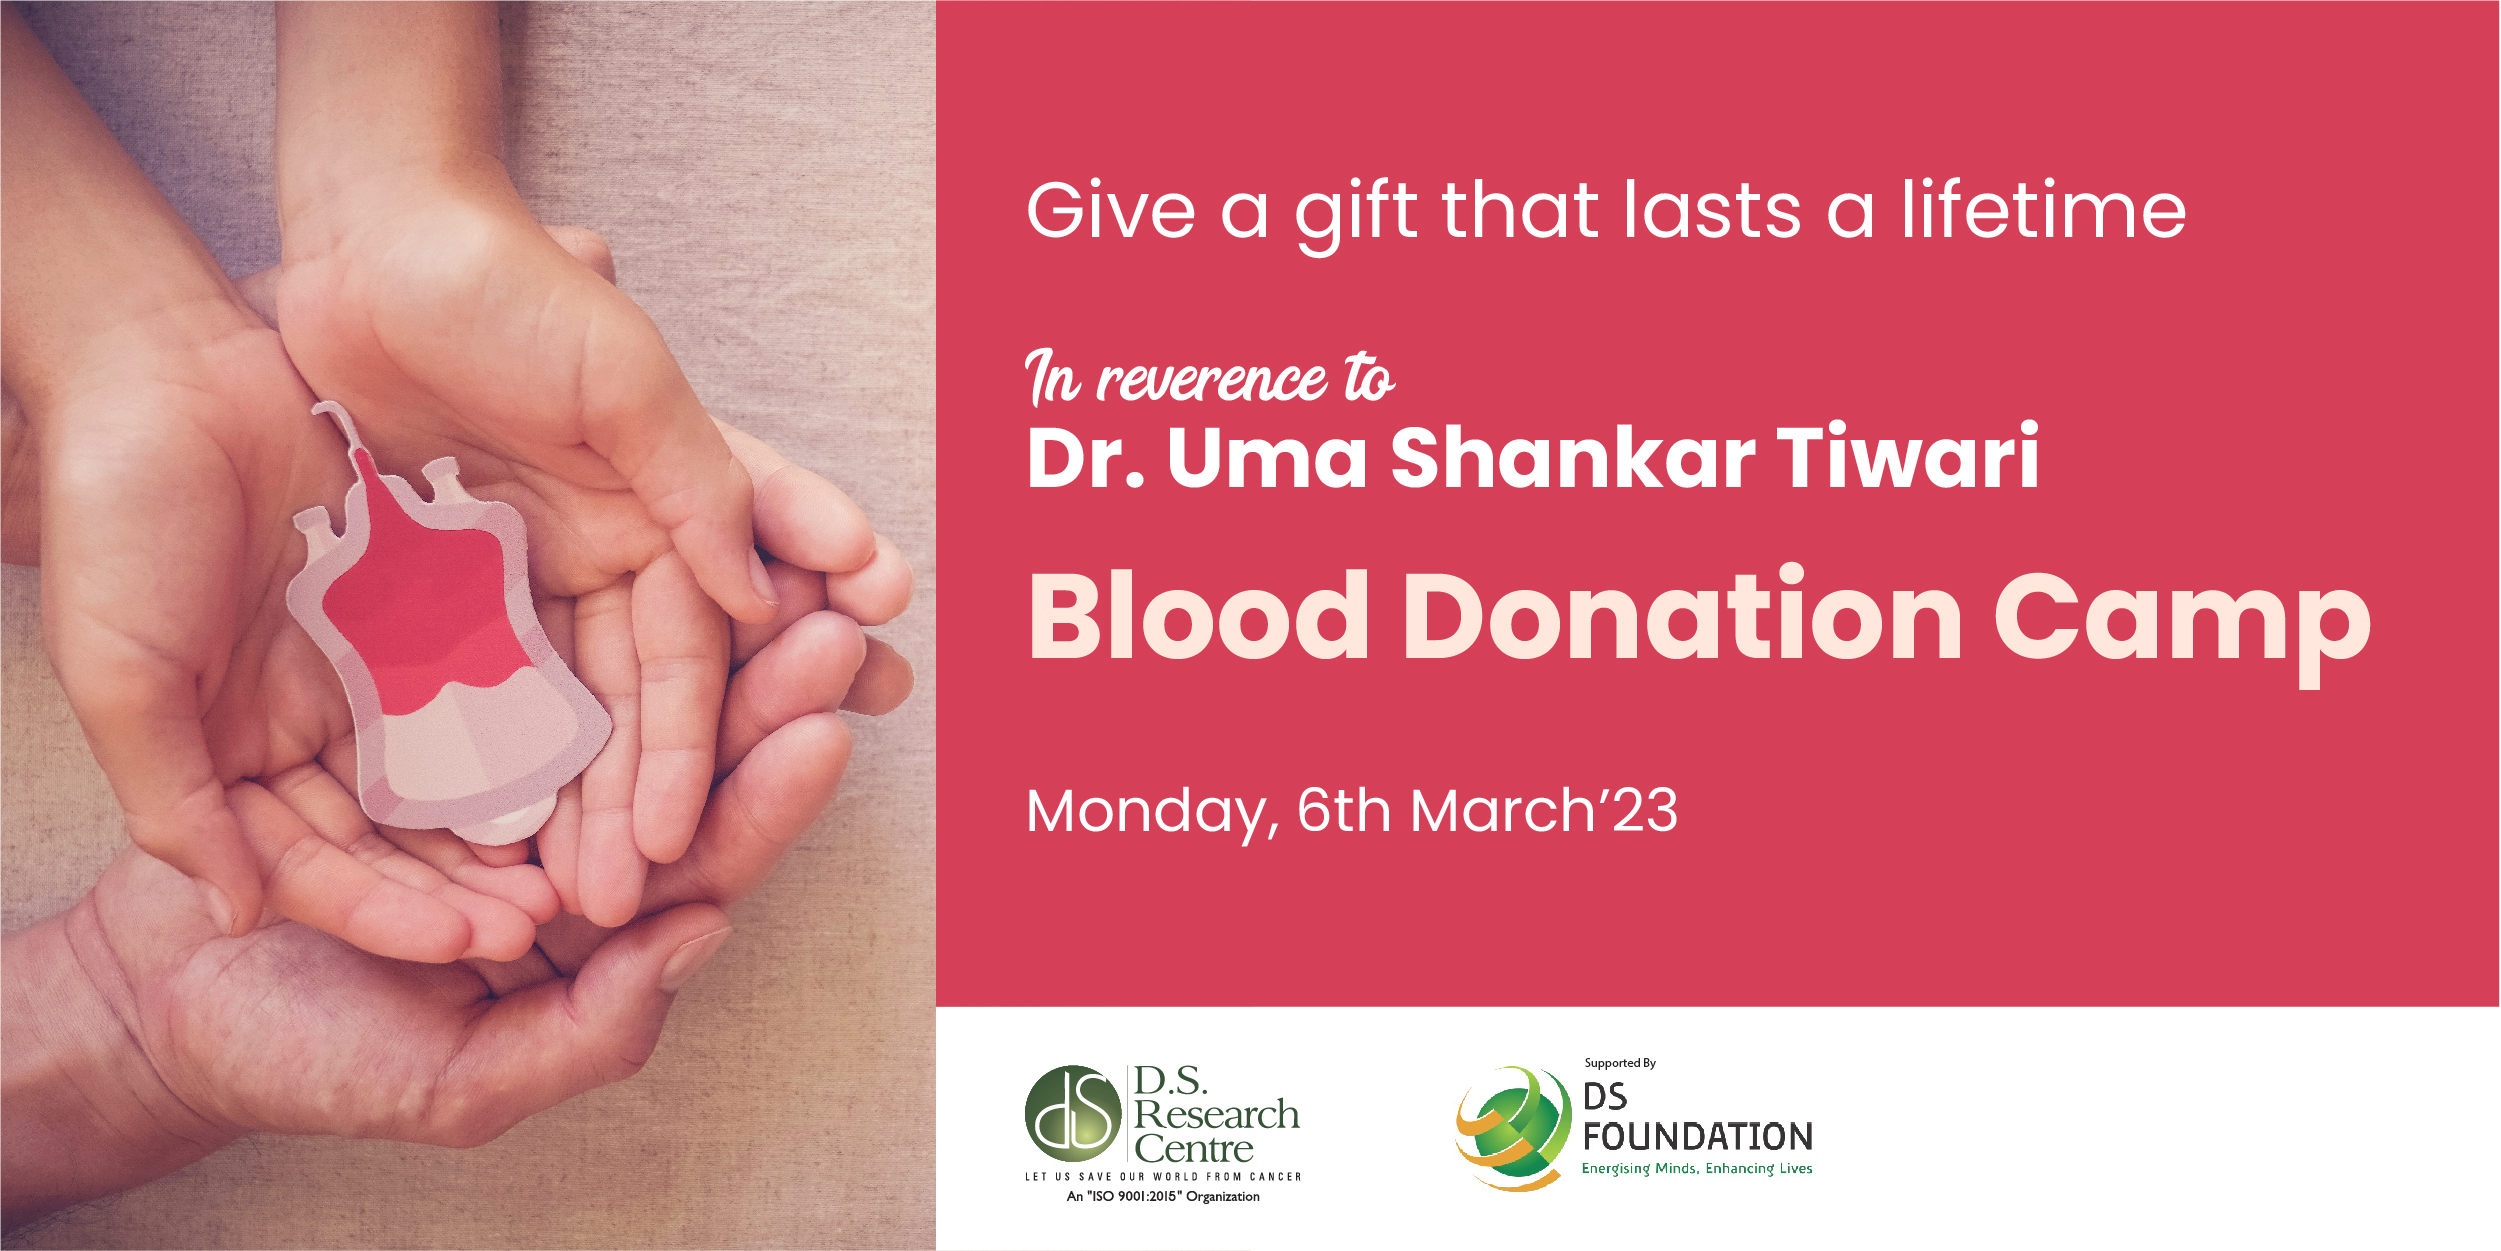 BLOOD DONATION CAMP IN REVENRENCE TO DR UMA SHANKAR TIWARI